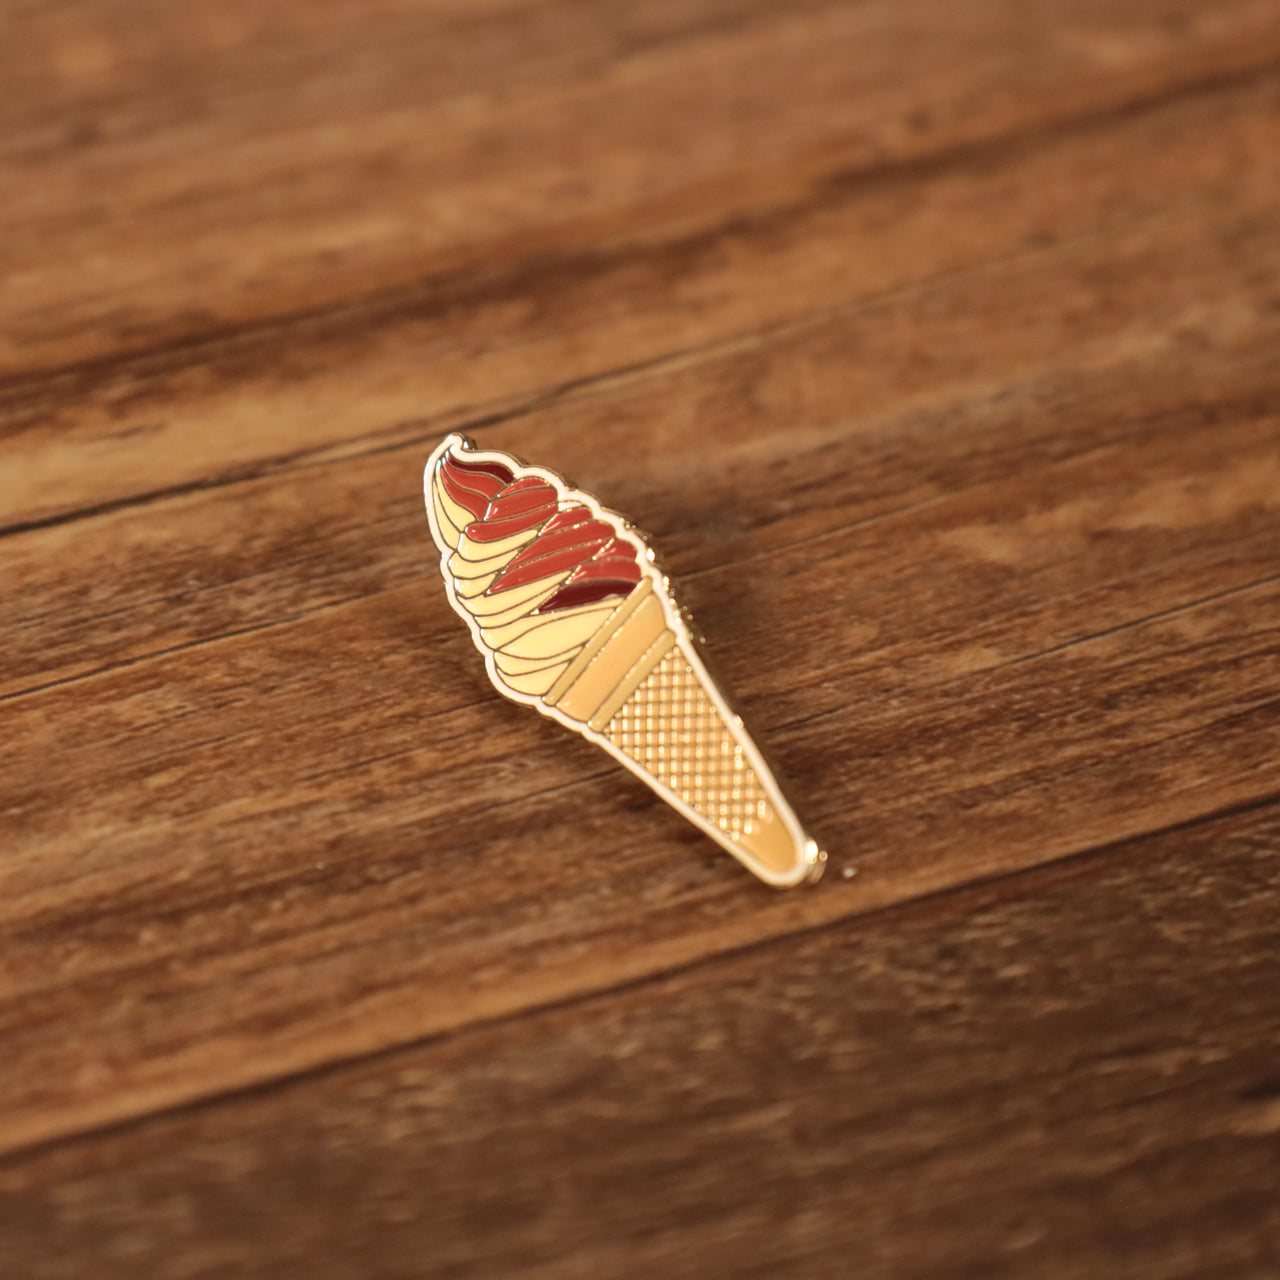 Jersey Shore Boardwalk Ice Cream Fitted Cap Pin | Enamel Pin For Hat